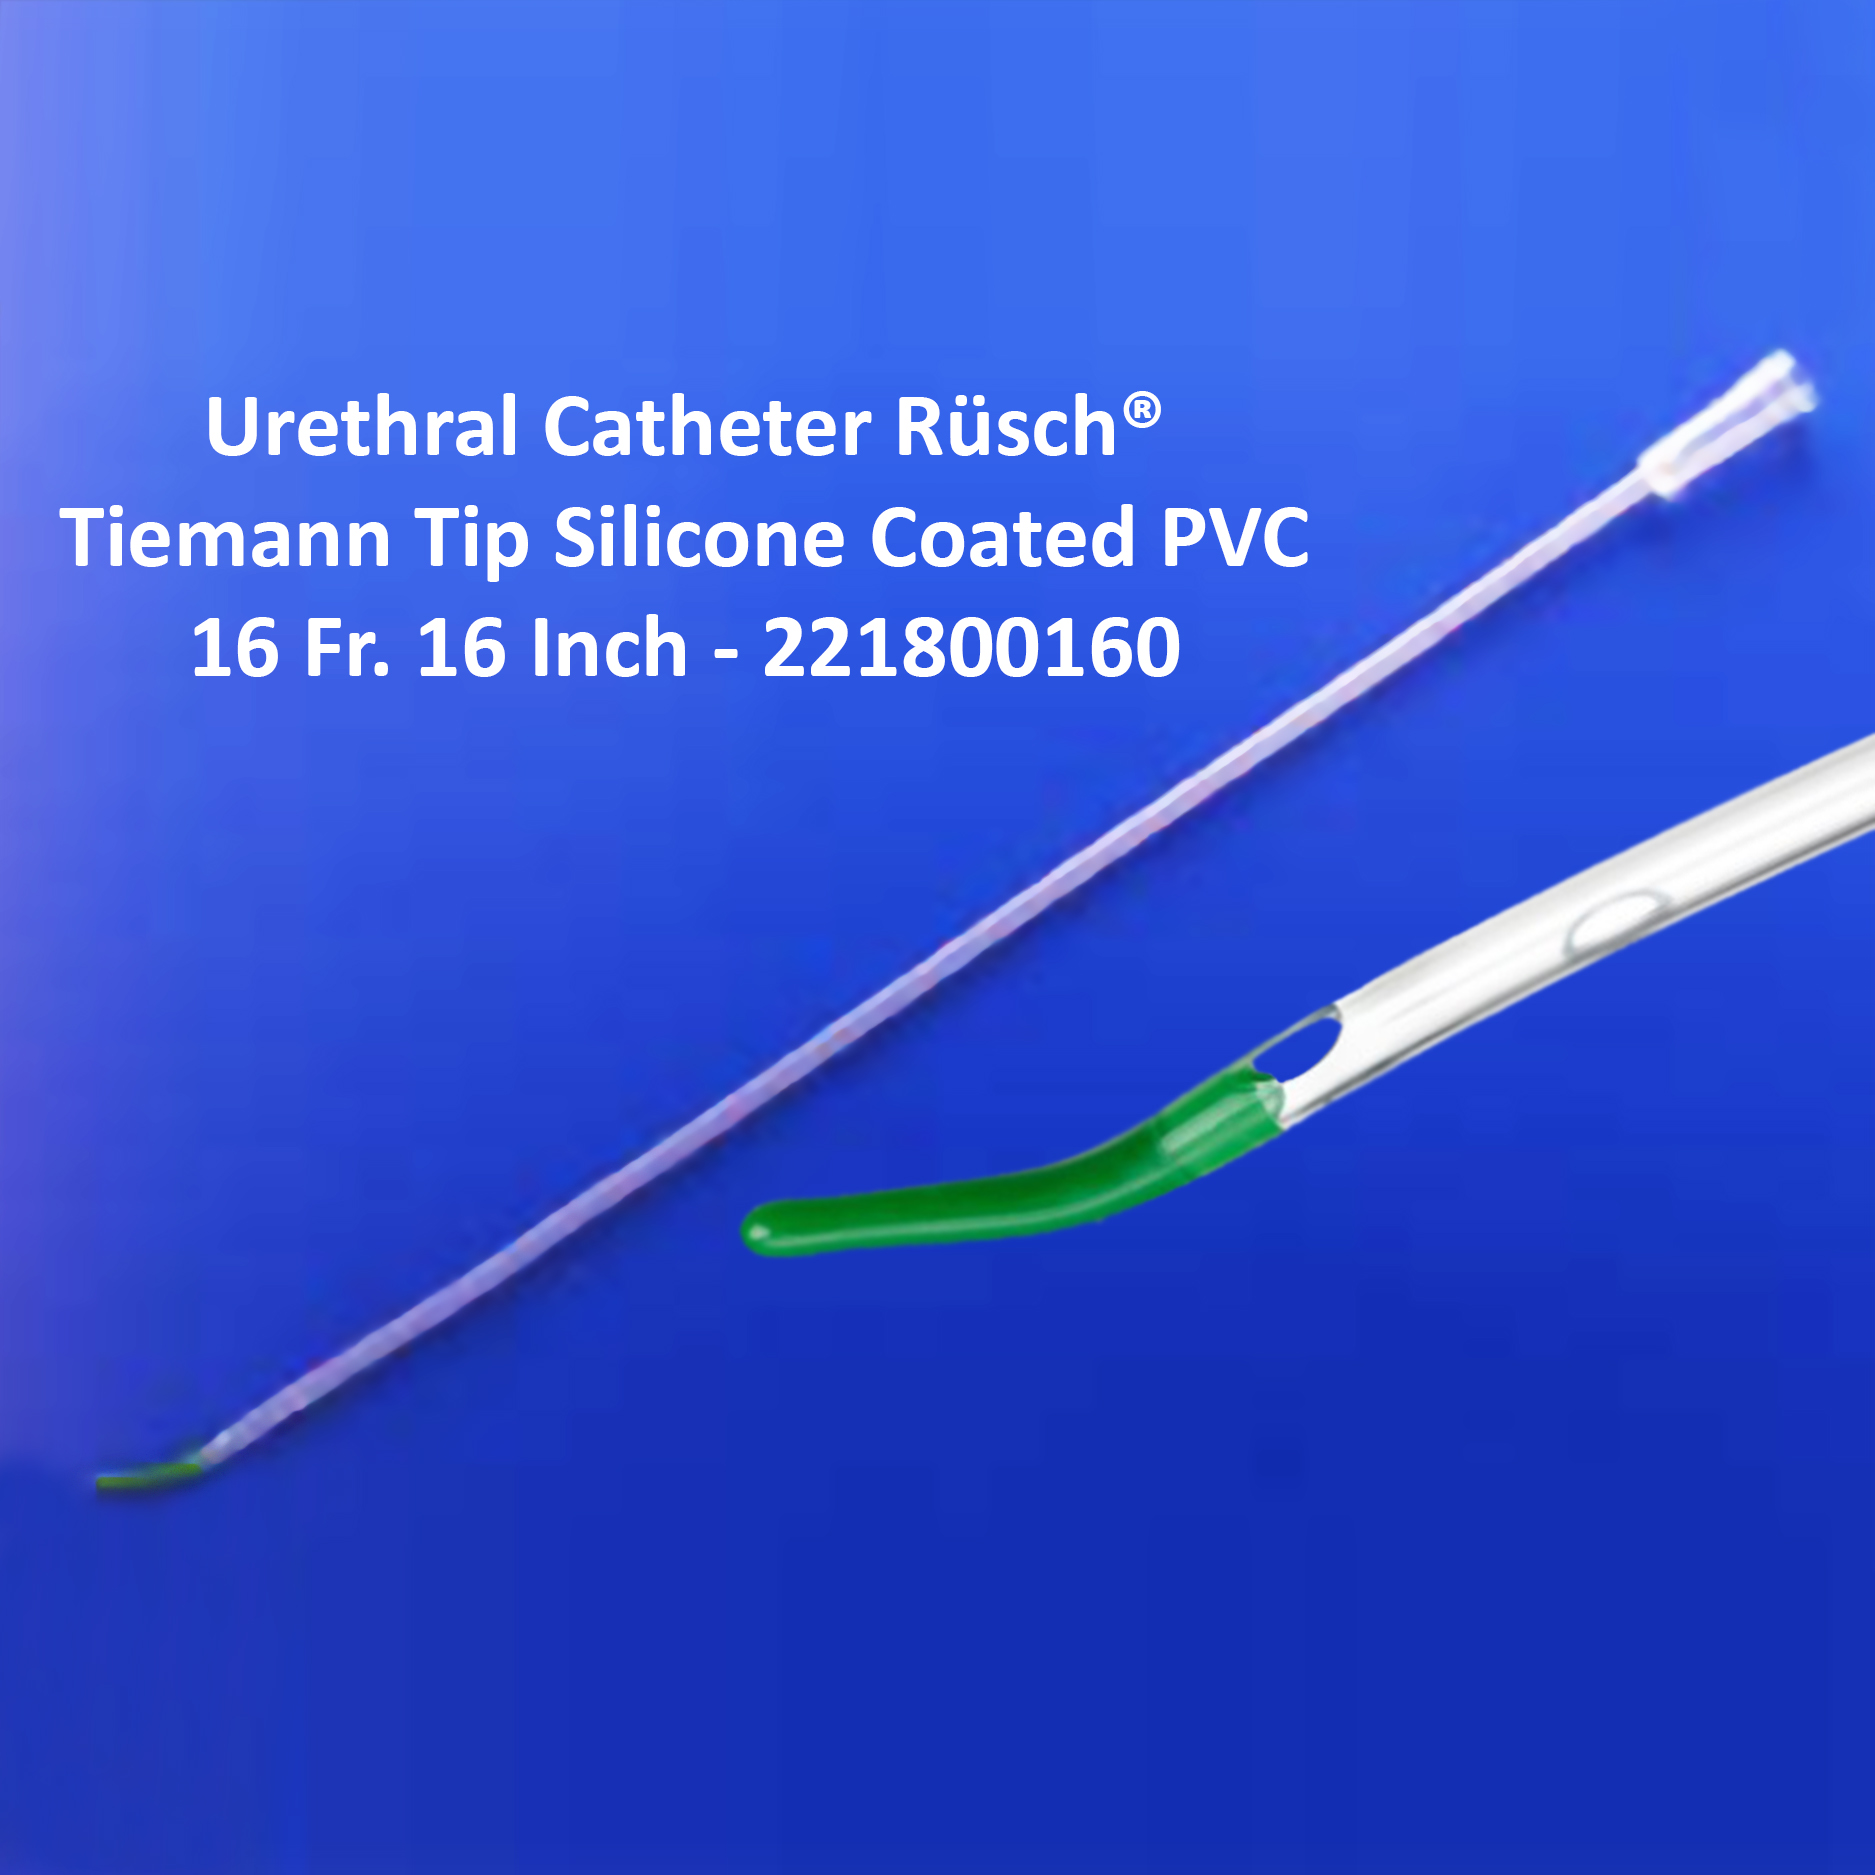 Urethral Catheter Rüsch® Tiemann Tip Silicone Coated PVC 16 Fr. 16 Inch - 221800160